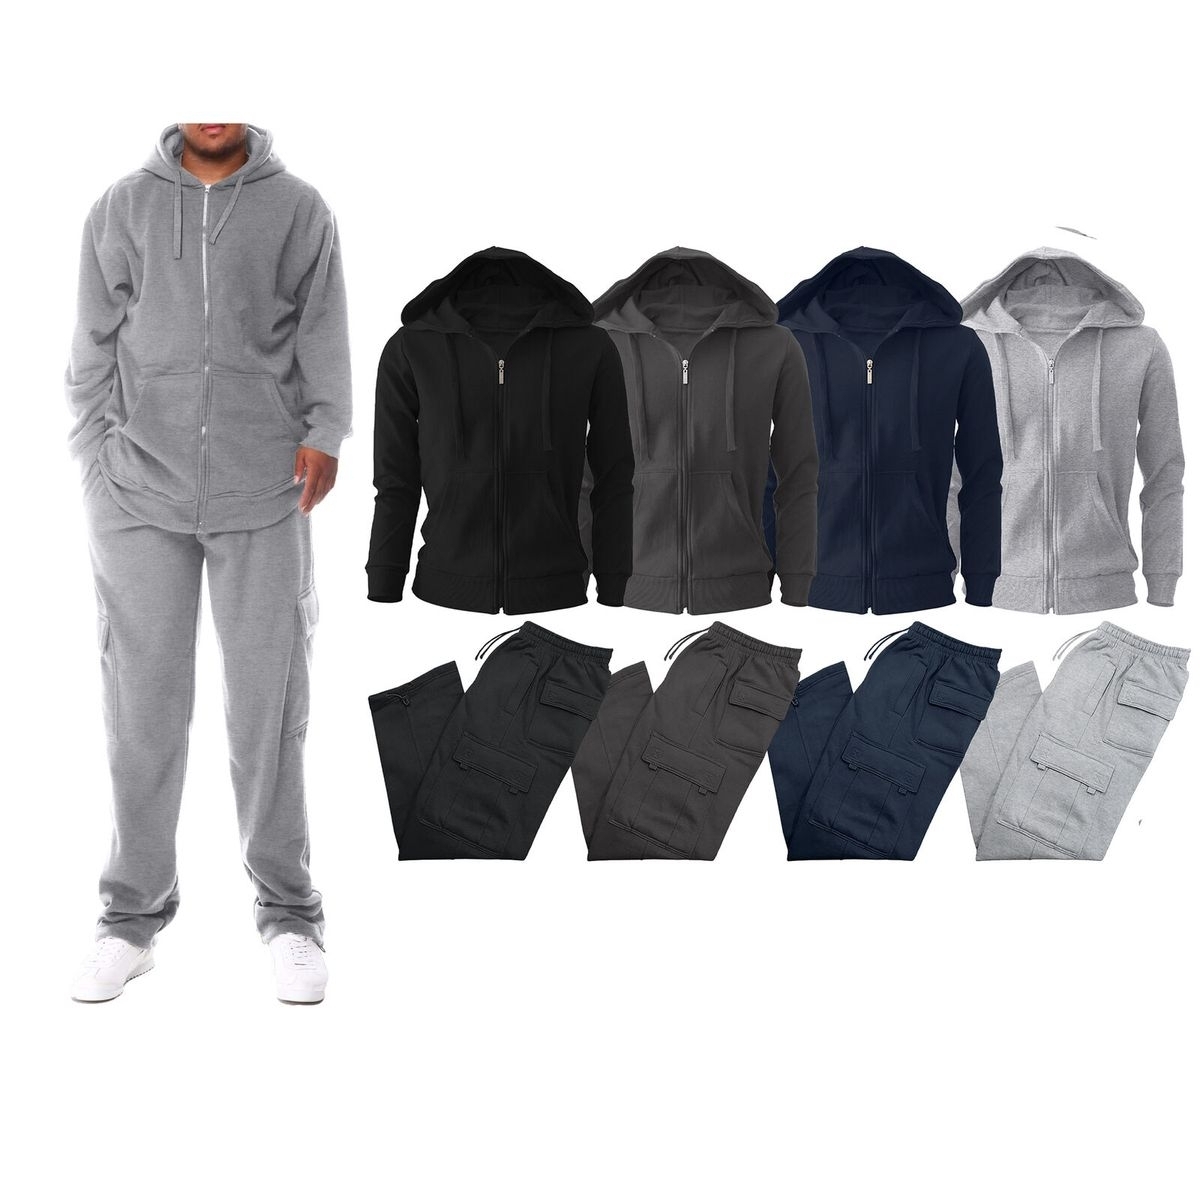 2-Pack: Men's Big & Tall Winter Warm Athletic Active Cozy Fleece Lined Multi-Pocket Full Zip Up Cargo Tracksuit - Black, Medium